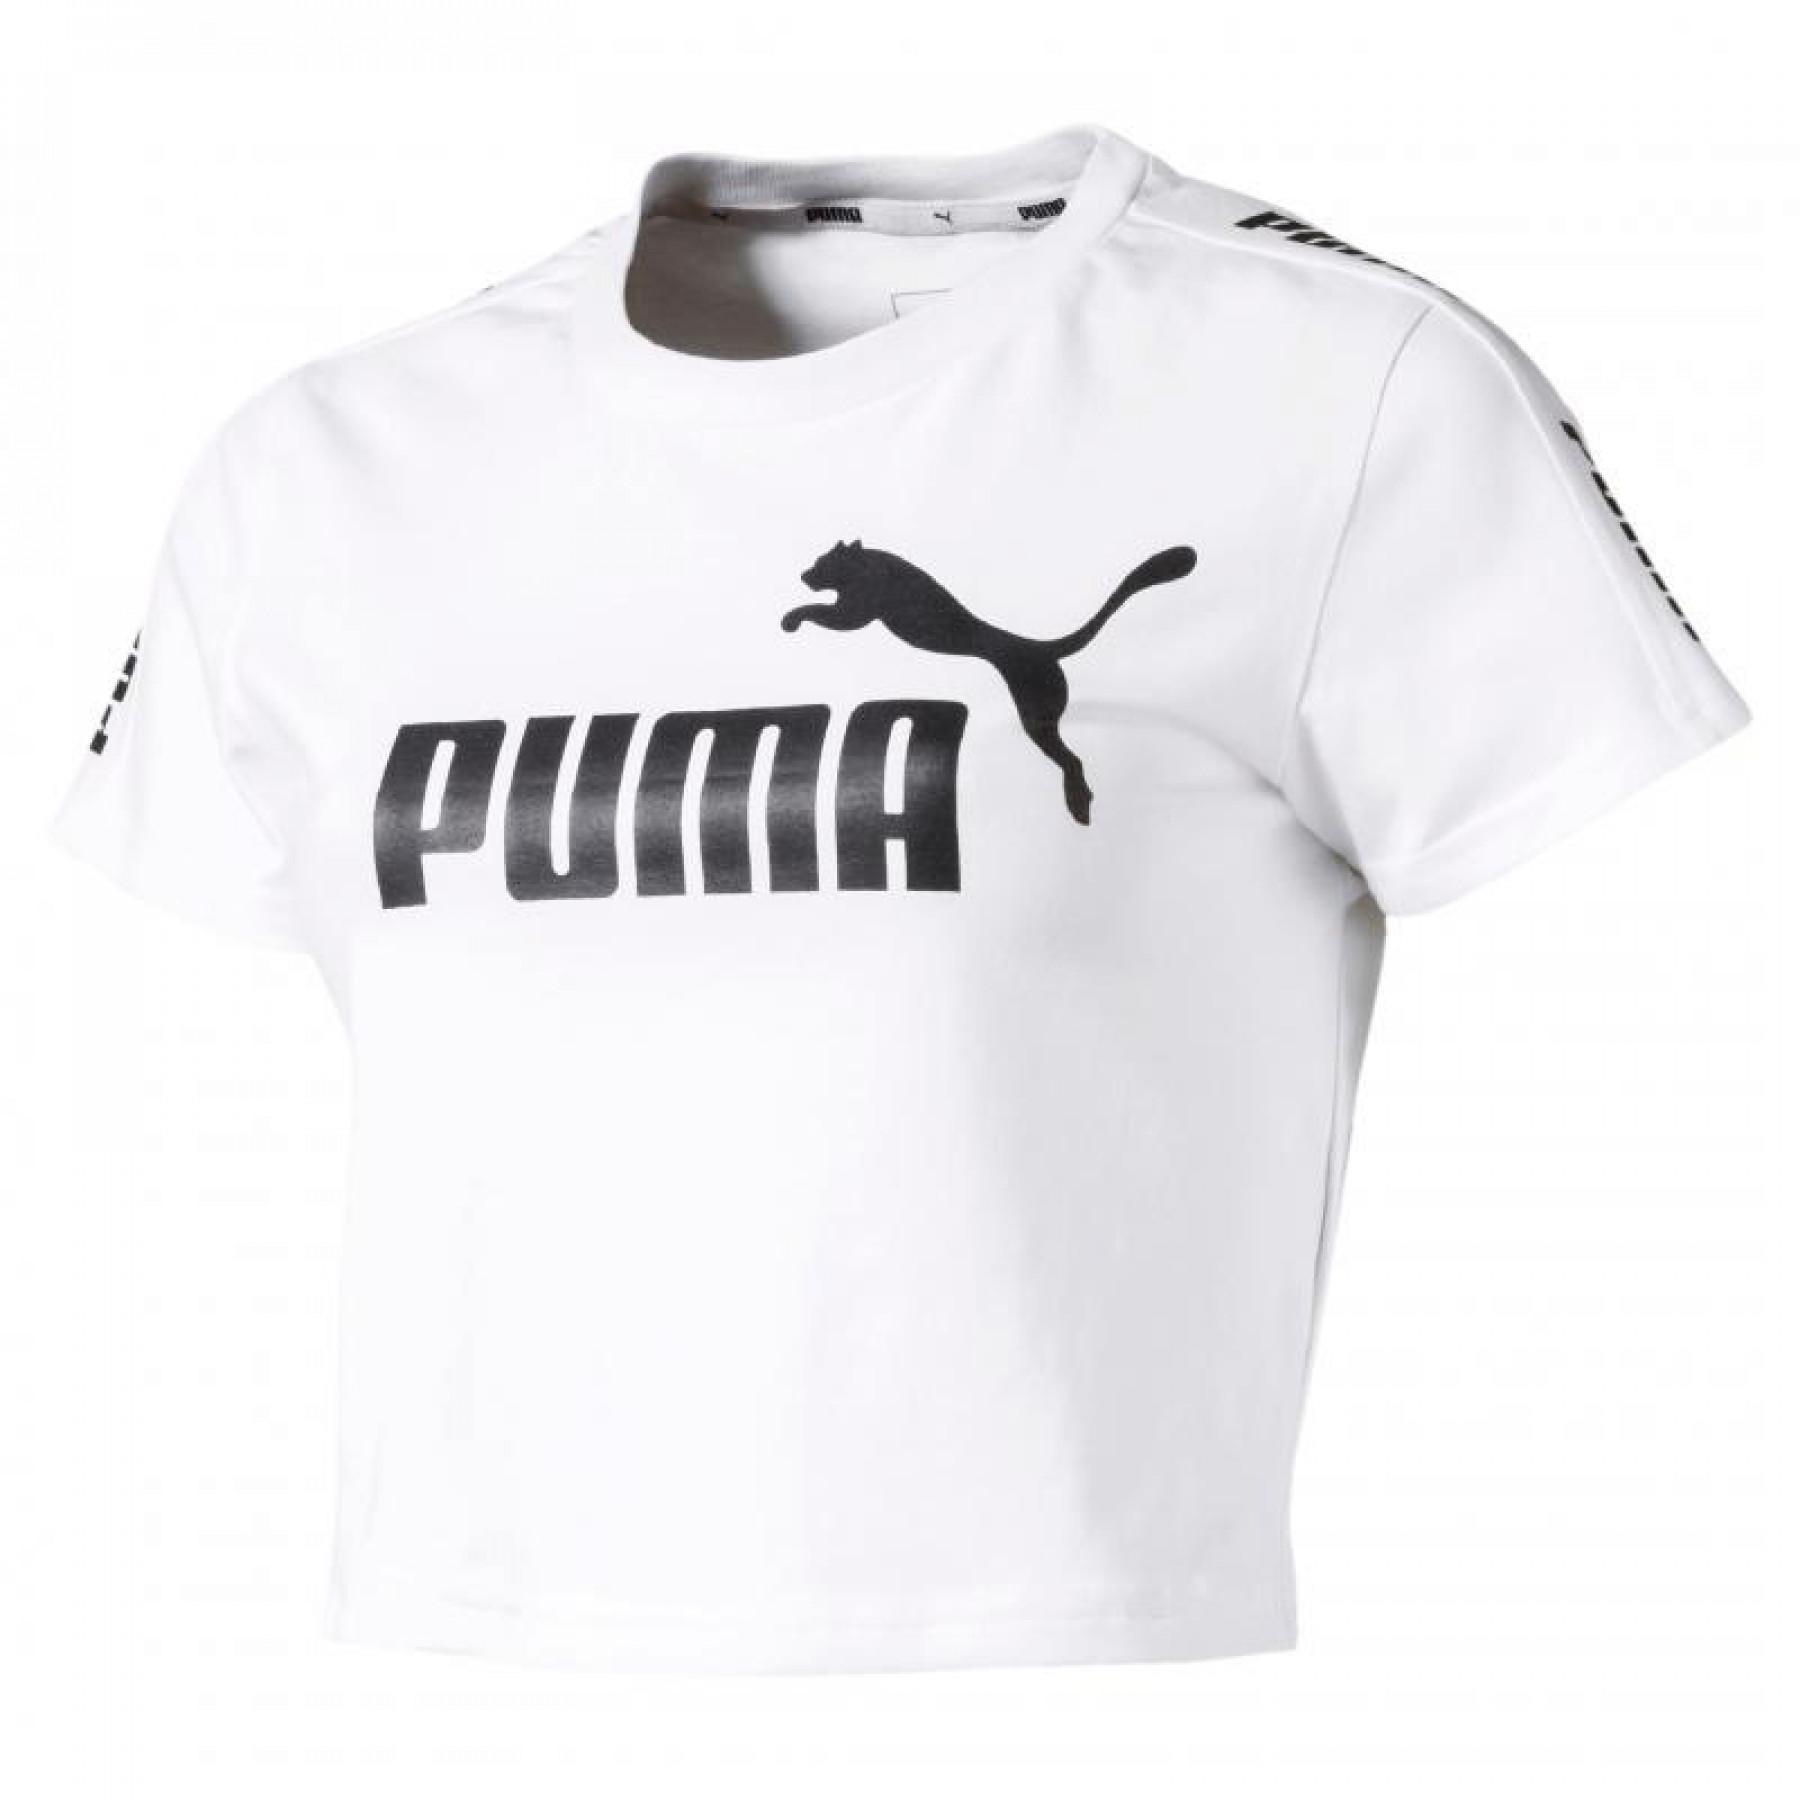 Women's T-shirt Puma Amplified logo fitted